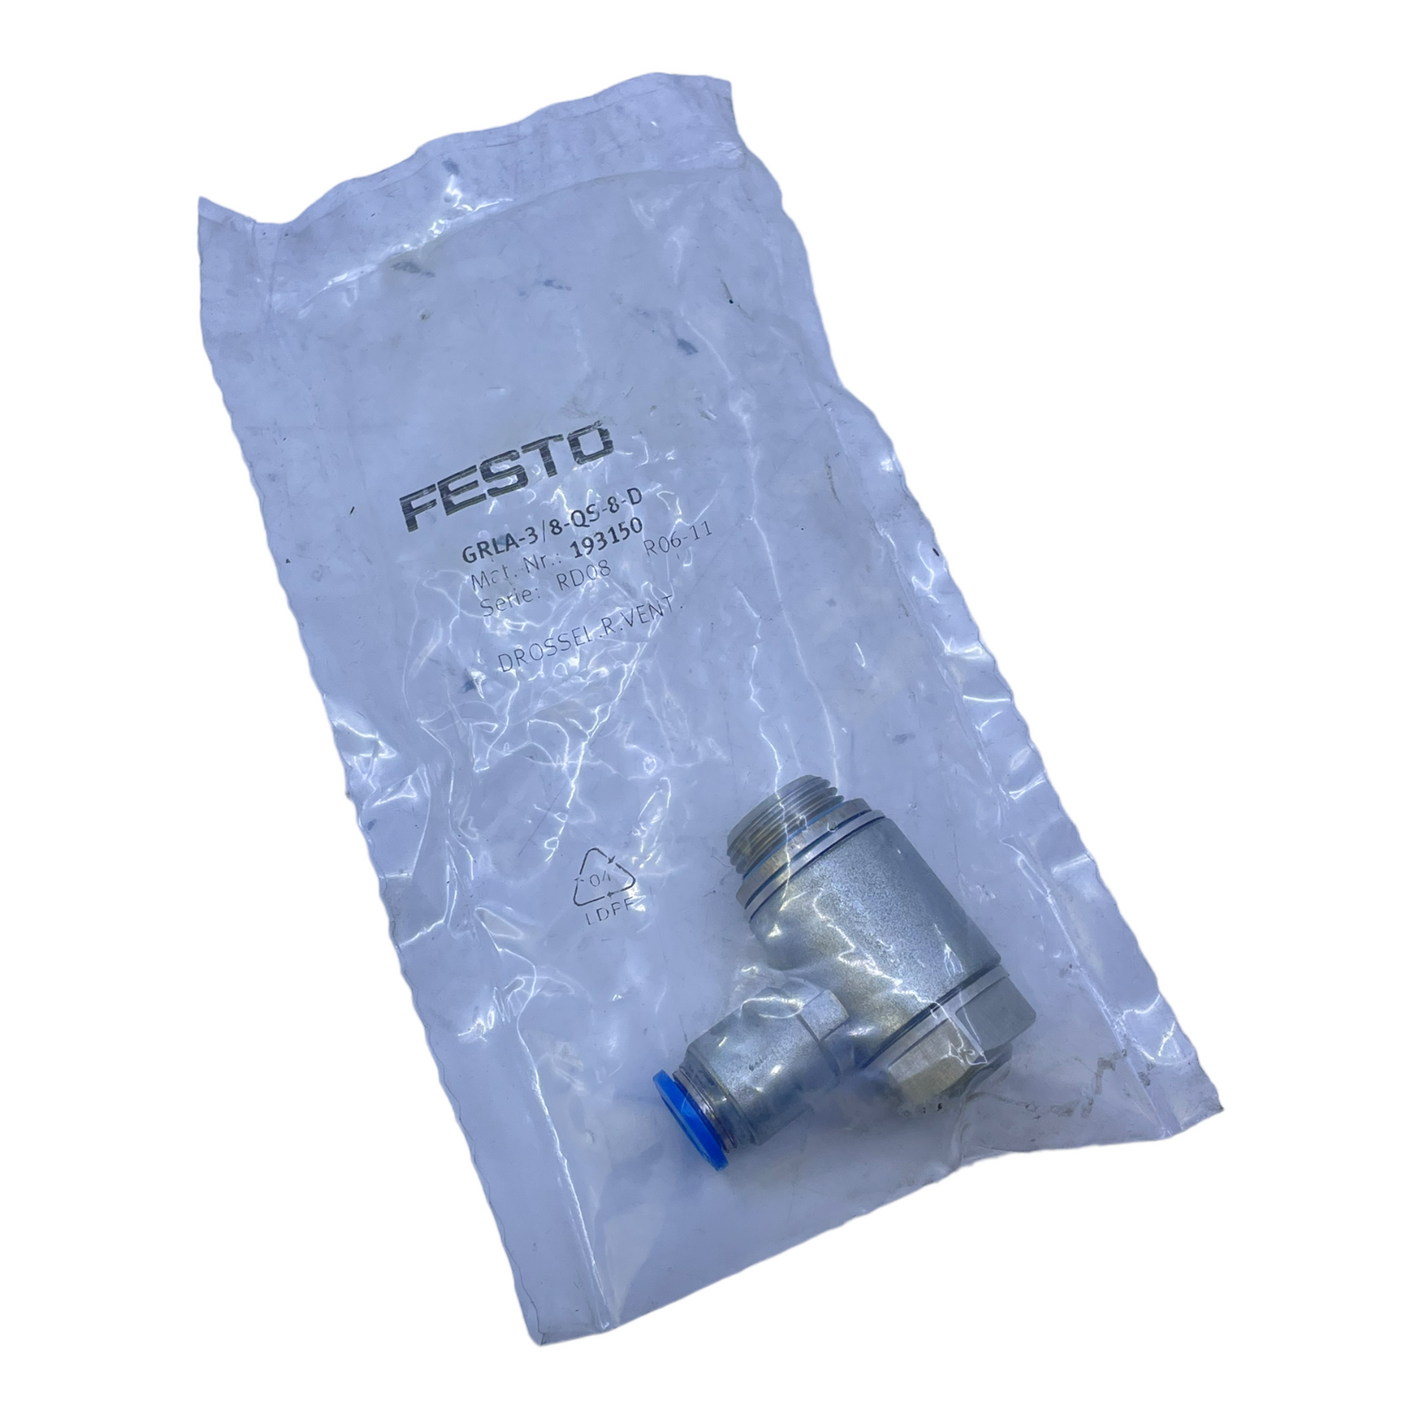 Festo GRLA-3/8-QS-8D throttle check valve 193150 check valve